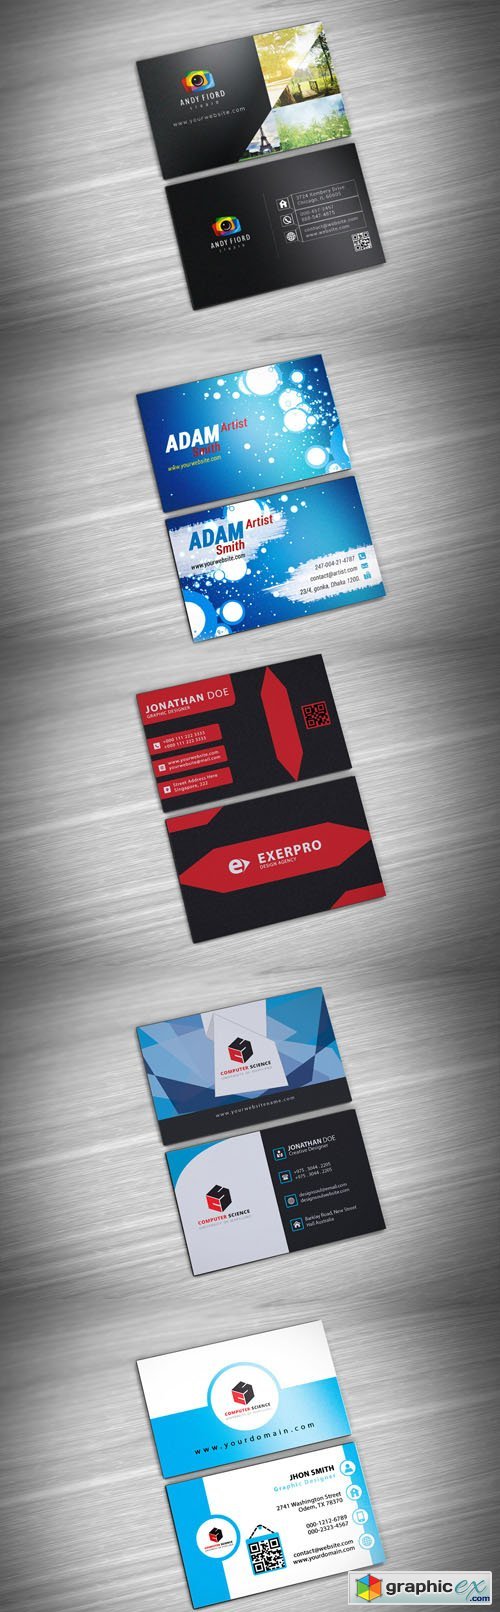 Business Card PSD Bundle - 5 Cards